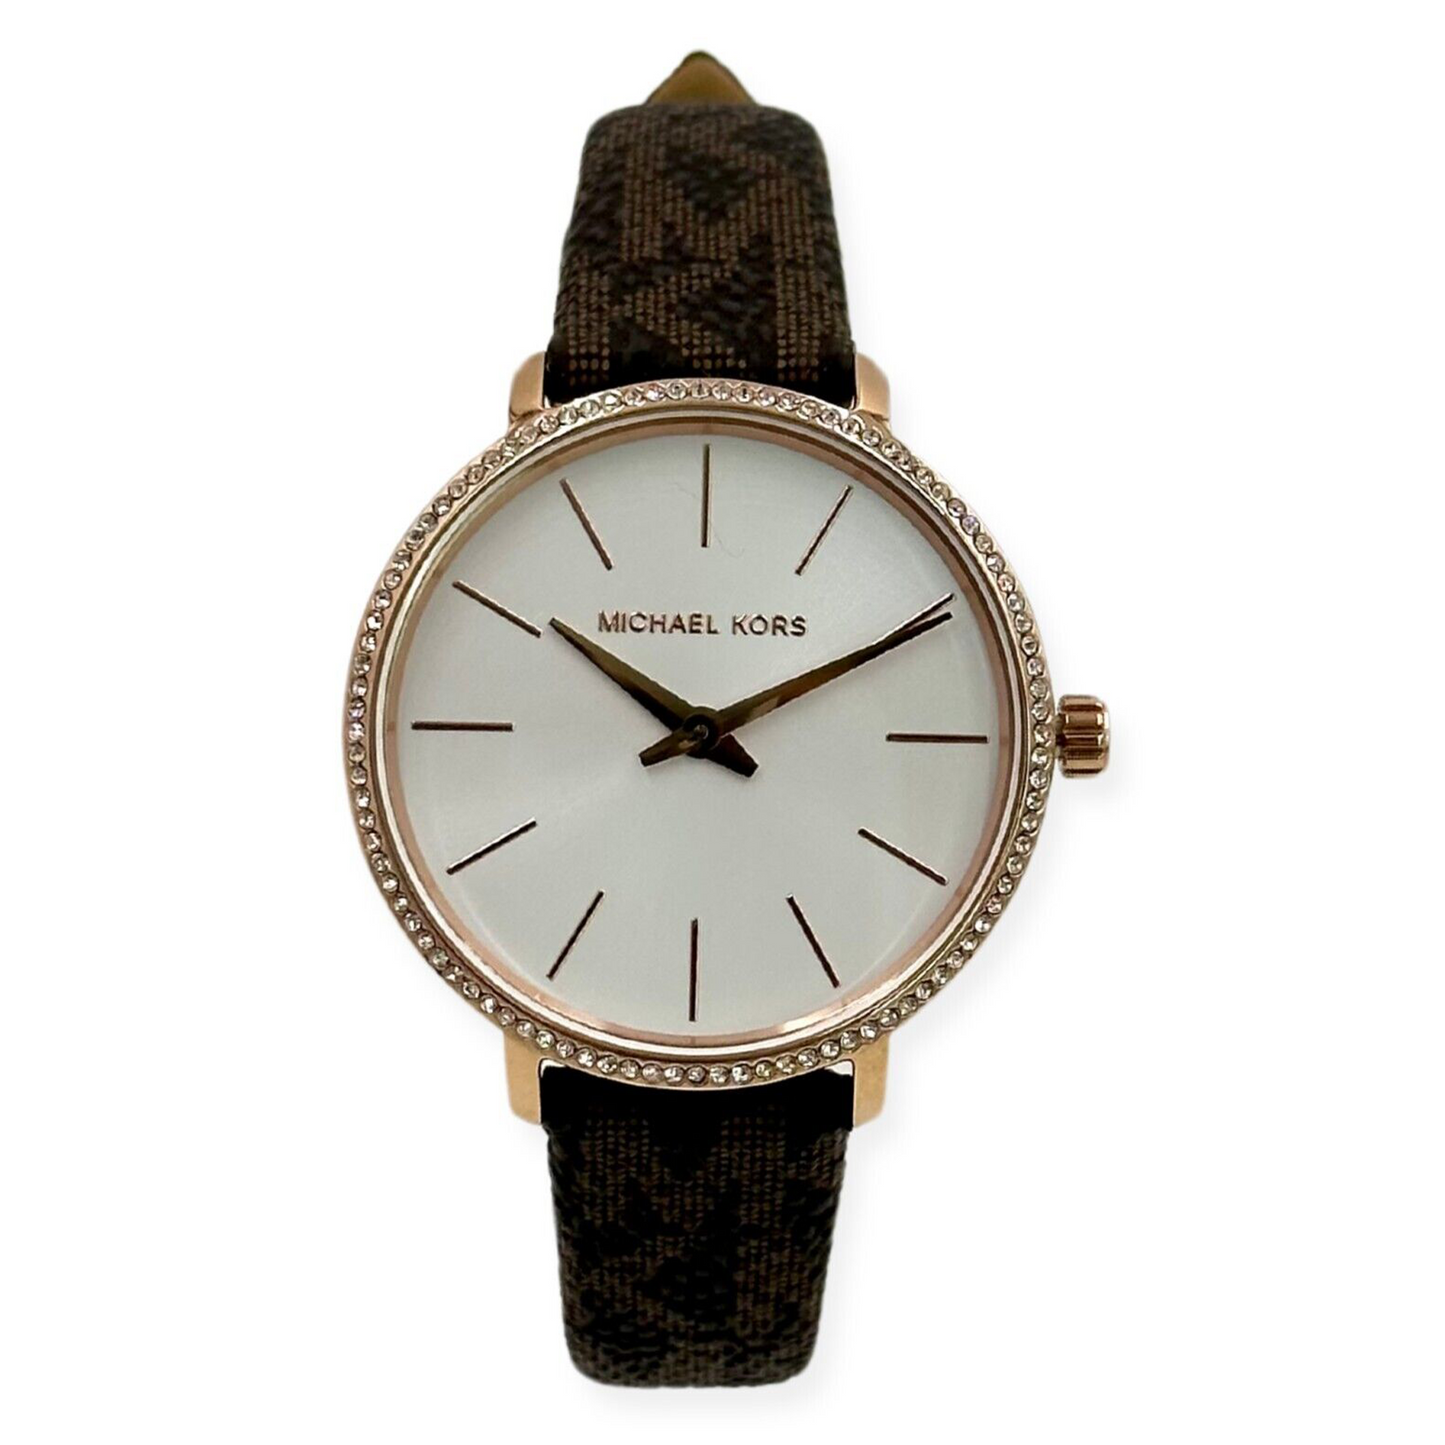 Michael Kors Pyper Analog White Dial Women's Watch with Bracelet - MK1036 - 796483540347 